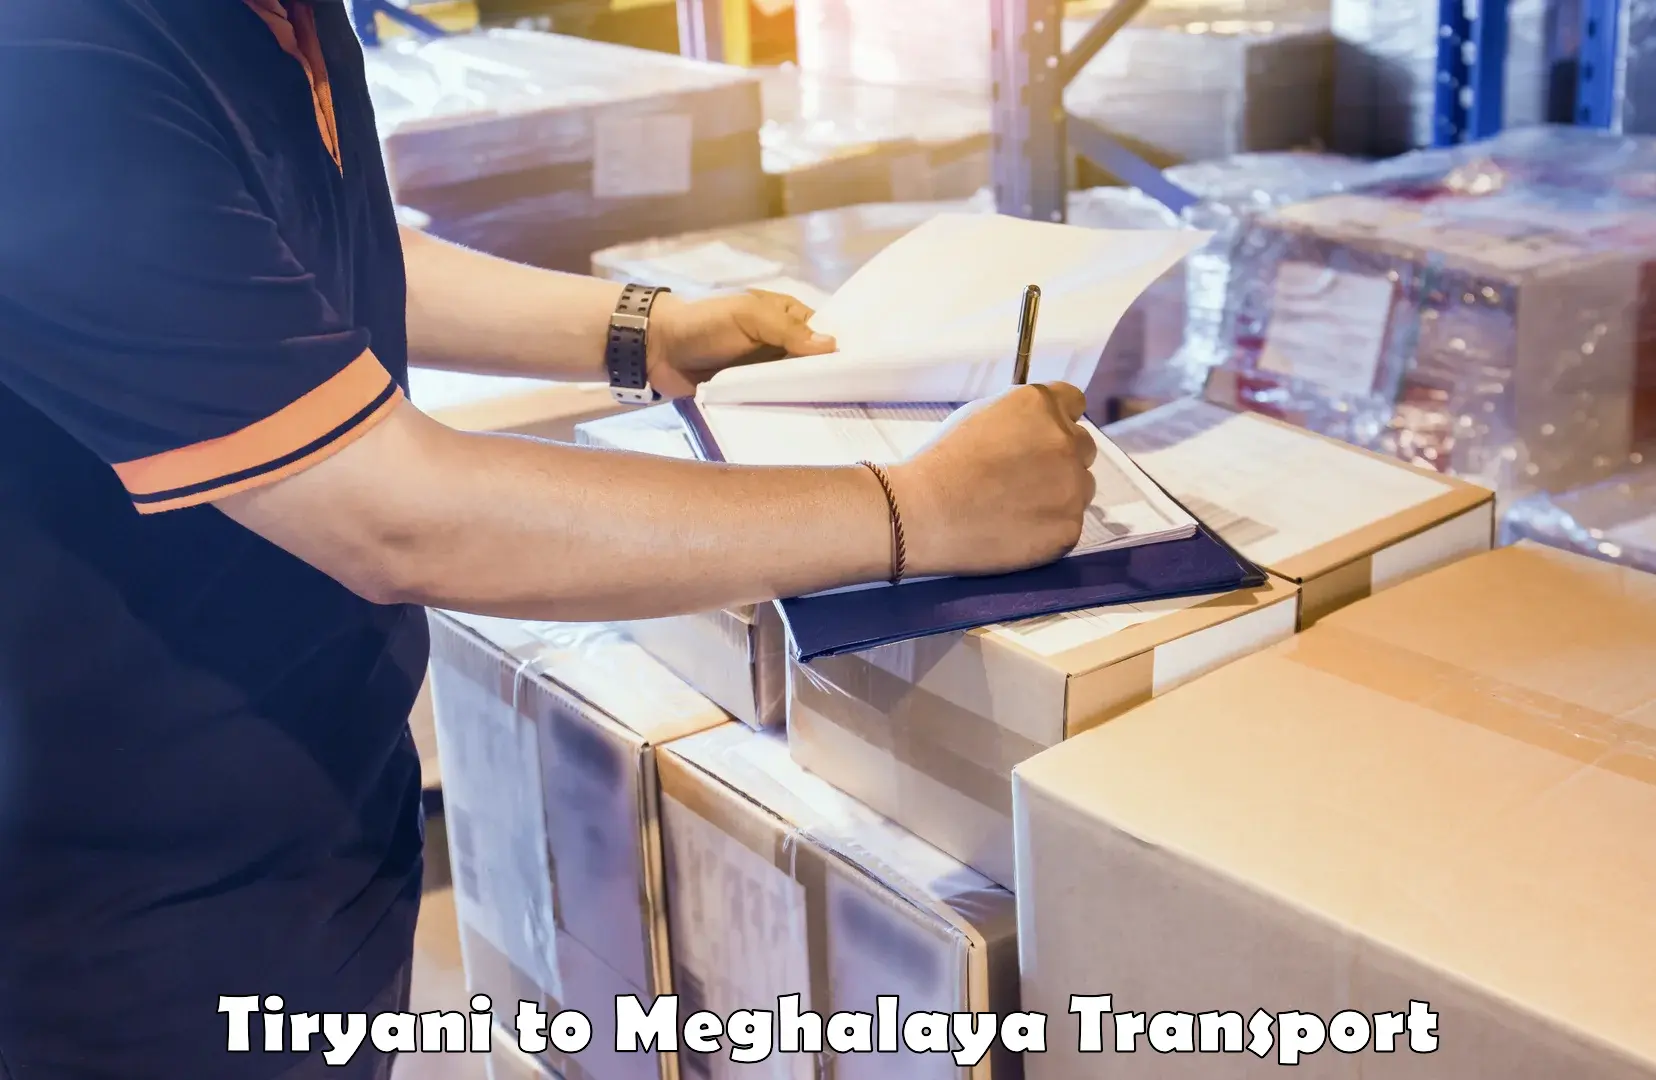 Bike transport service Tiryani to Meghalaya